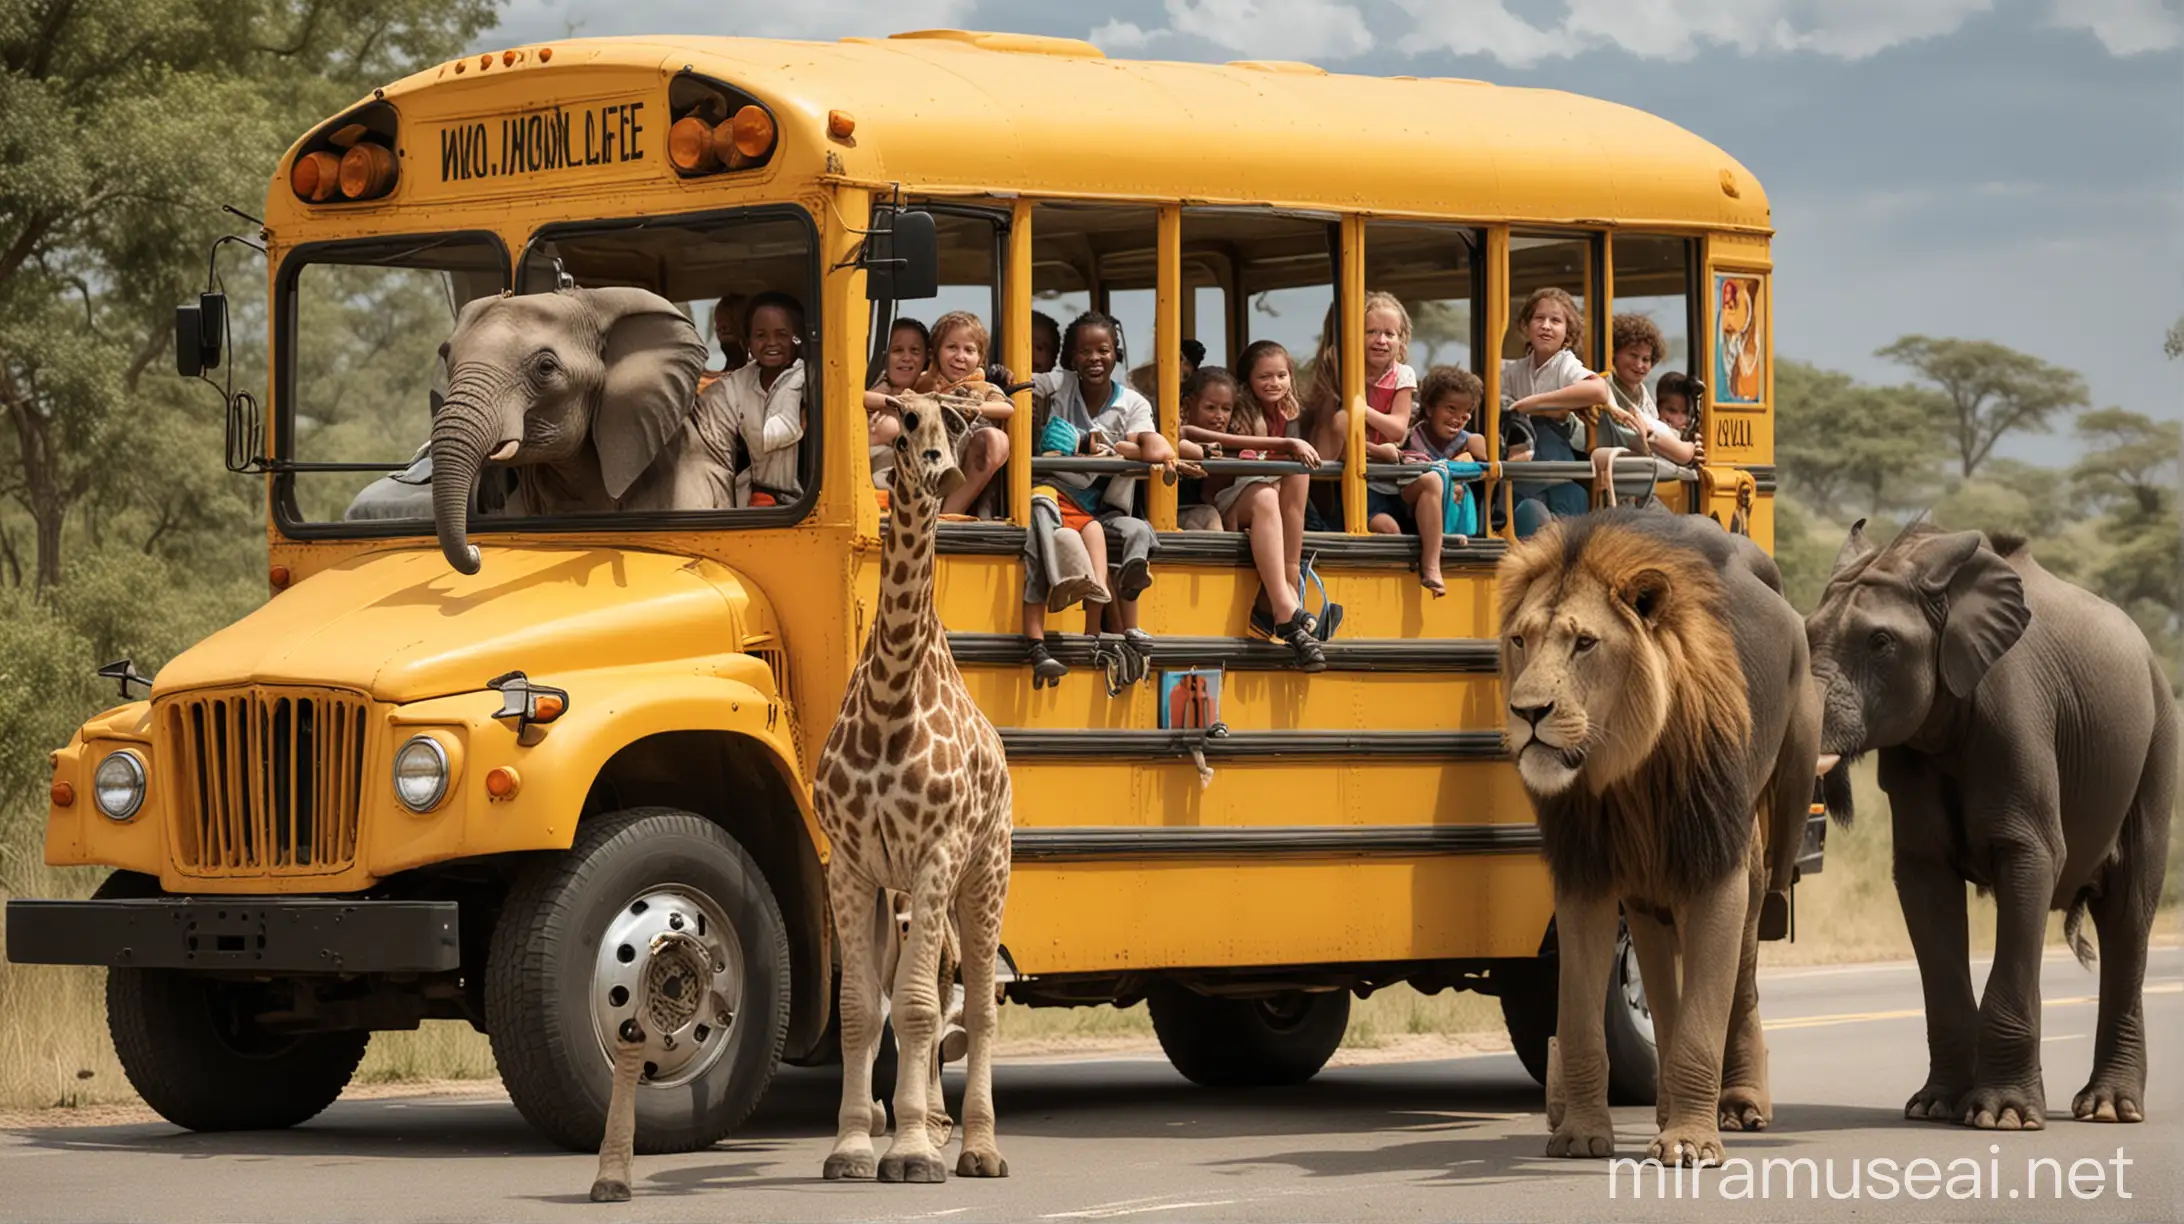 Wildlife Safari Adventure Elephant Giraffe Gorilla and Lion on a School Bus